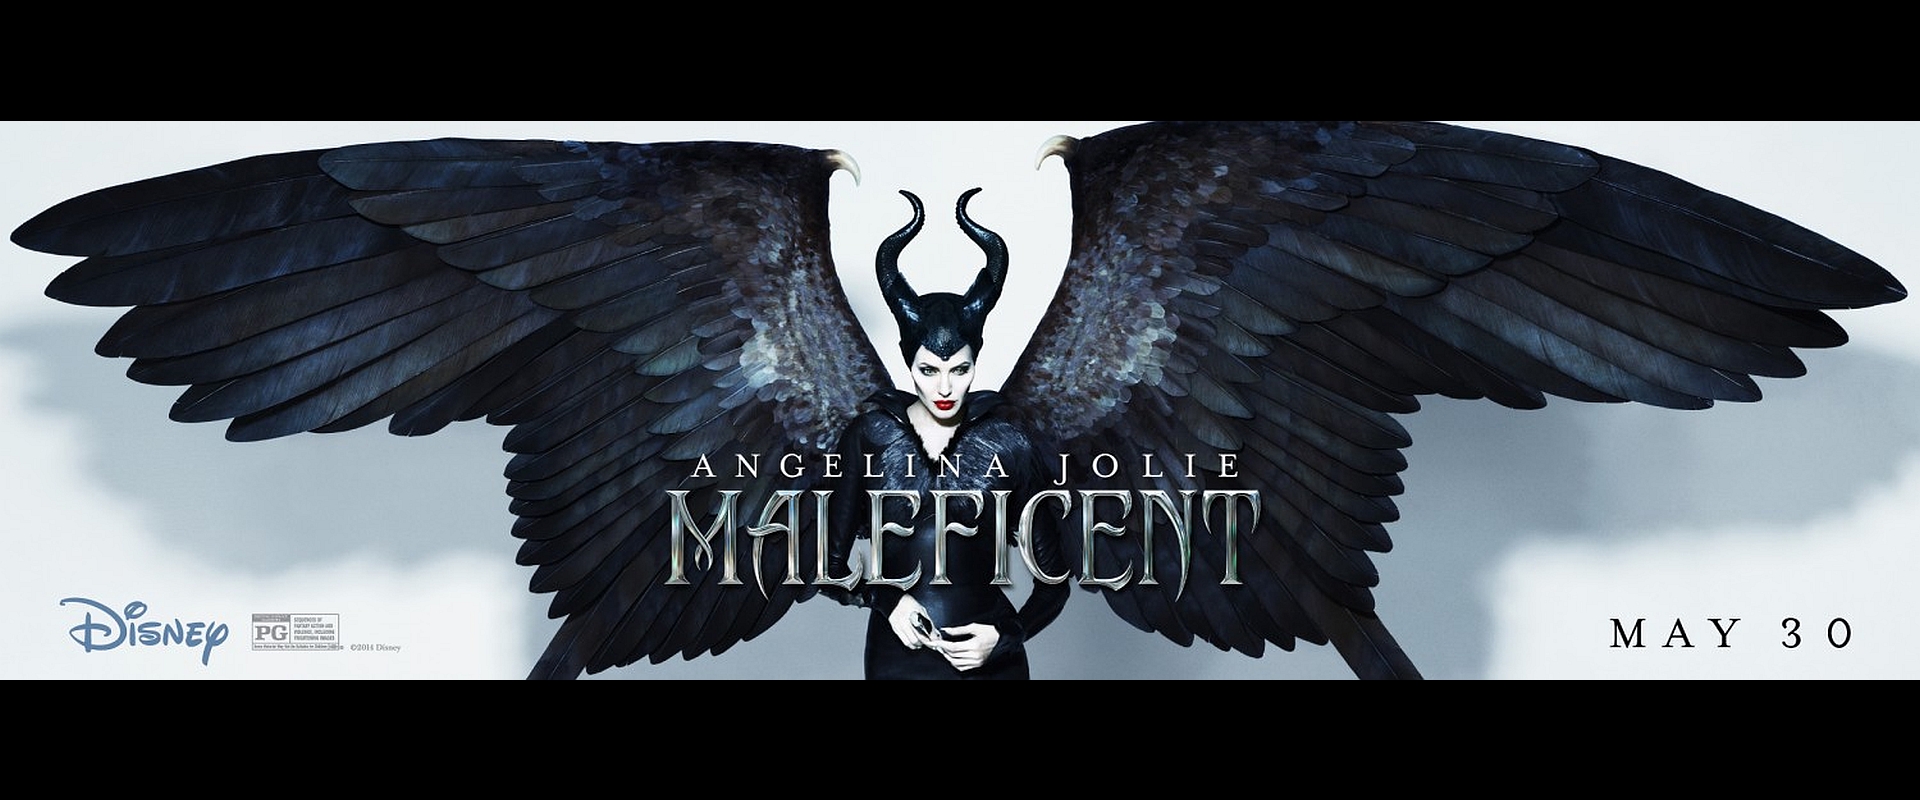 Maleficent Angelina Jolie 1920x800